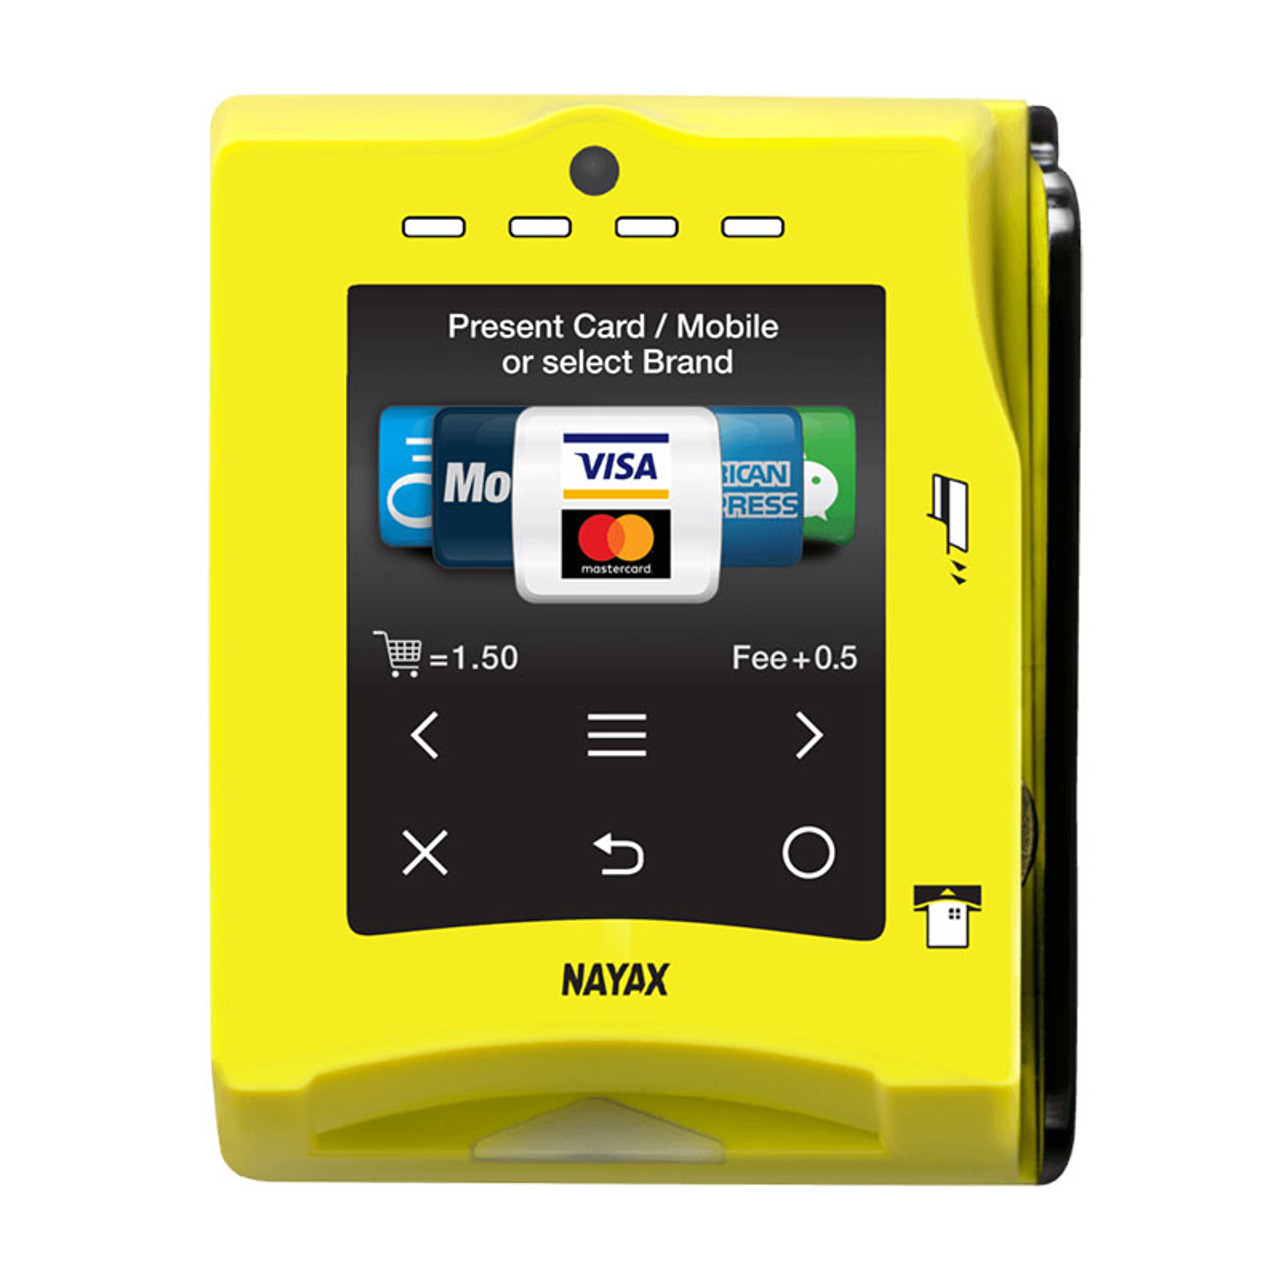 Nayax Vpos Touch Cashless Credit Card Reader Candymachines Com